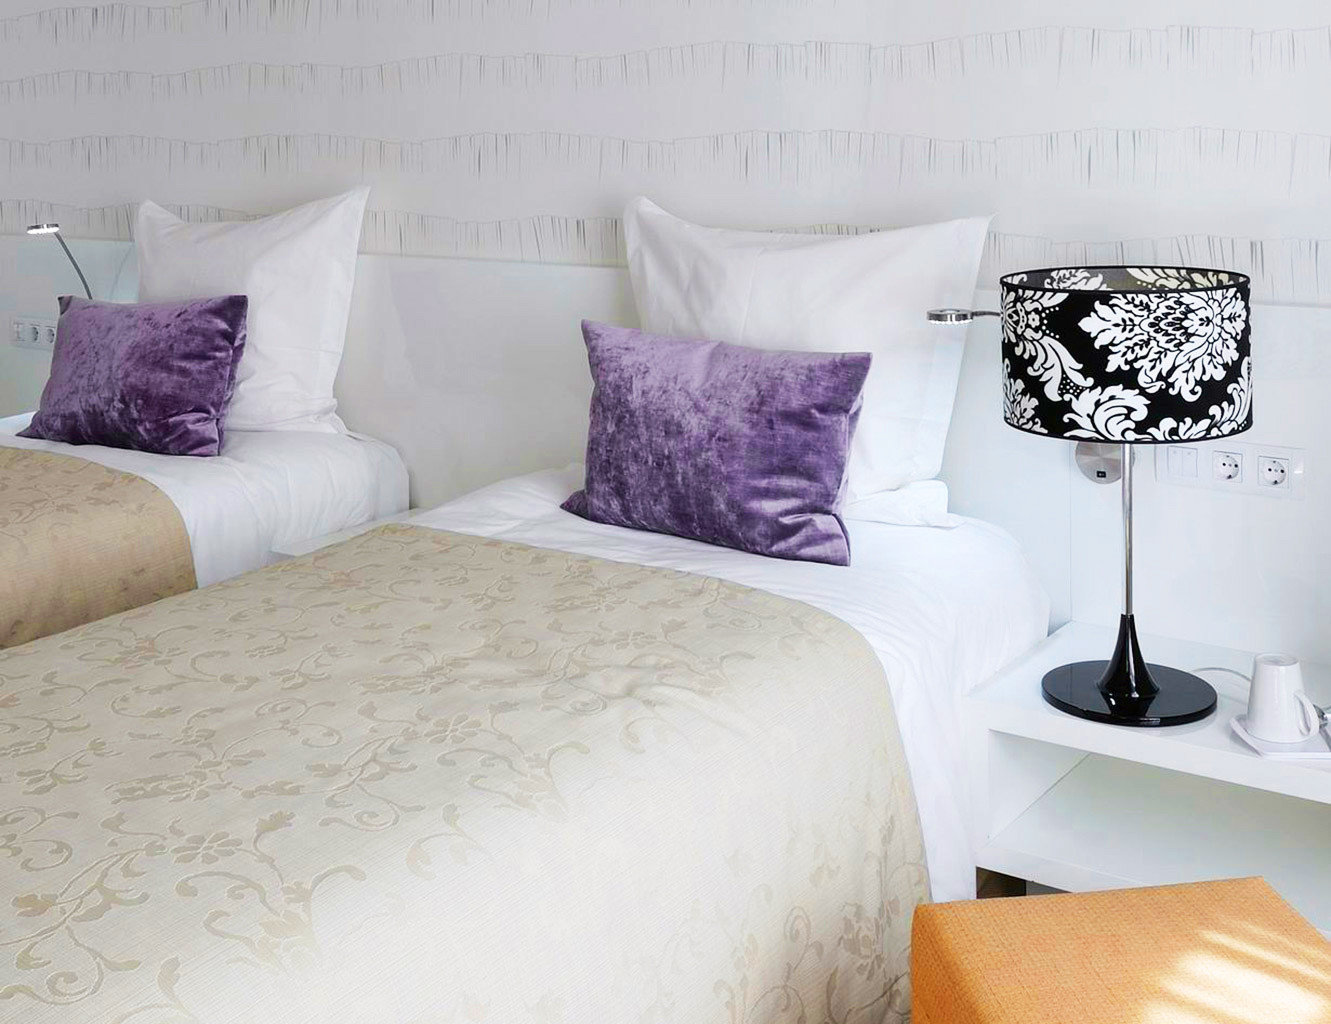 Bedroom Modern sofa pillow duvet cover bed sheet textile material lamp night colored tan